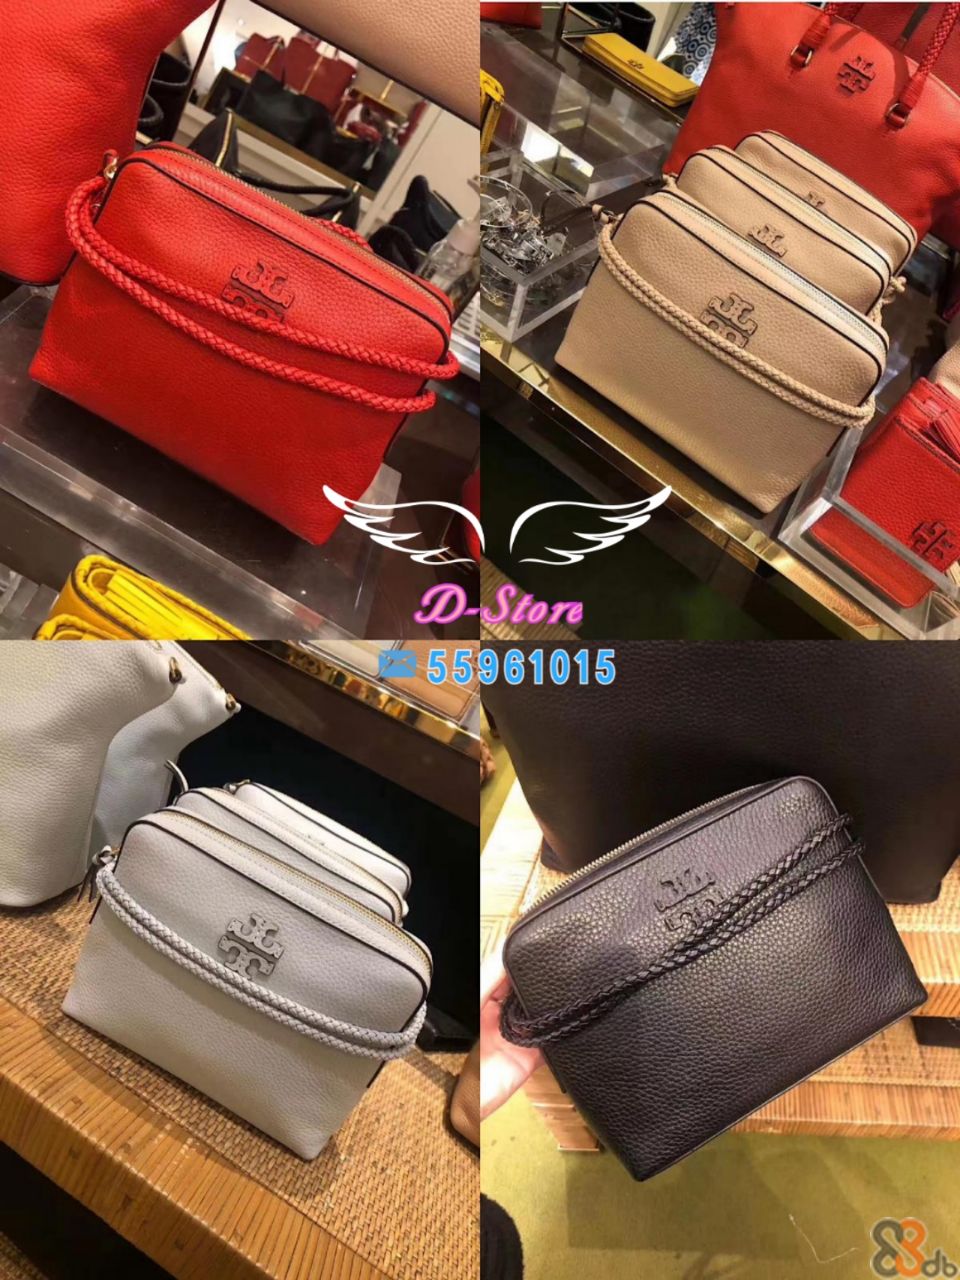 D-Store 55961015  Bag,Handbag,Coin purse,Fashion accessory,Material property